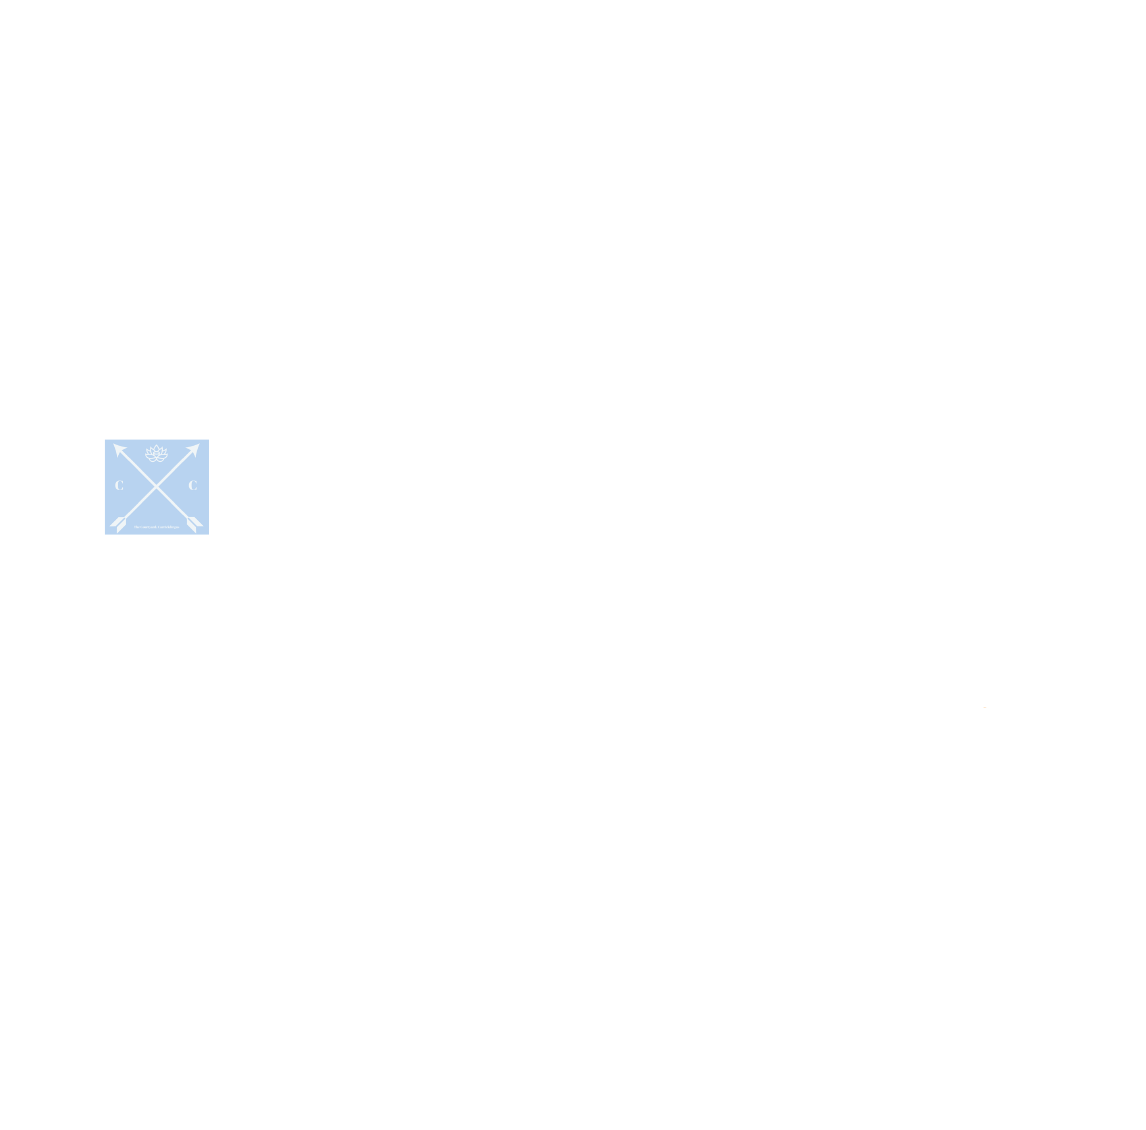 Logos of the awards sponsors.